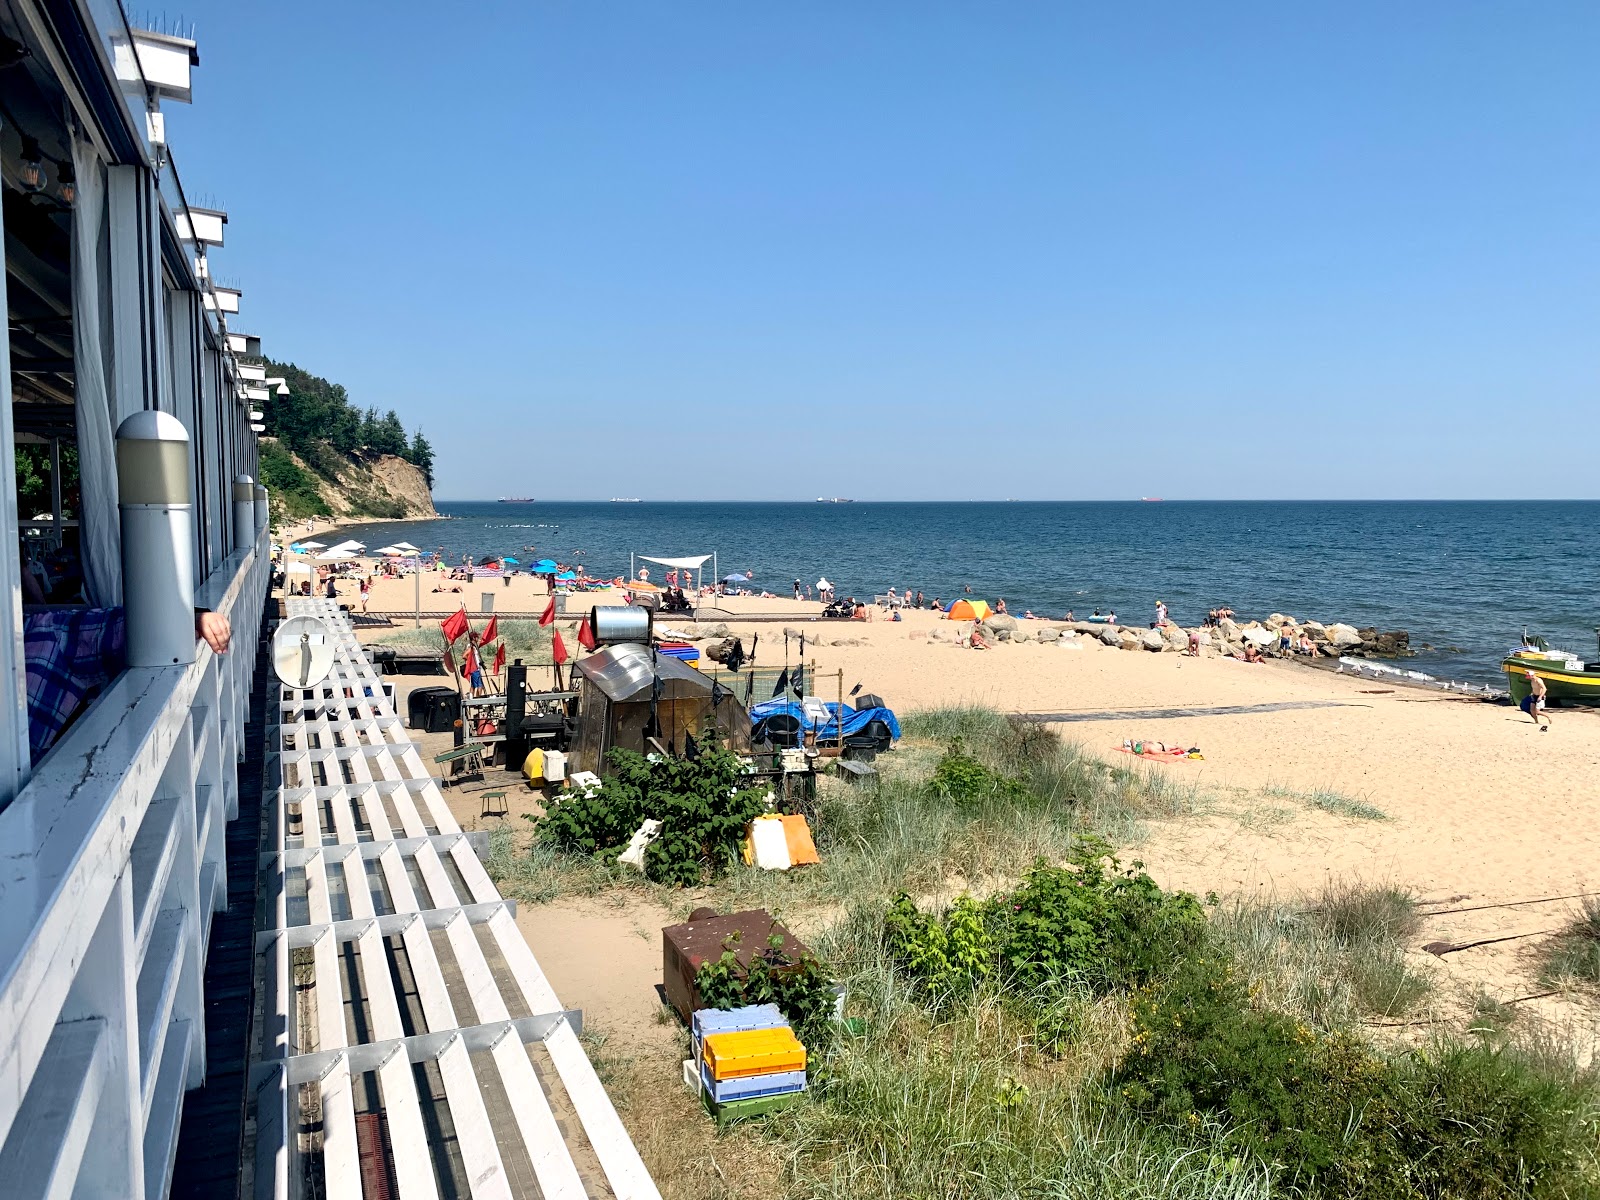 Fotografija Gdynia-Orlow beach dobro mesto, prijazno za hišne ljubljenčke za počitnice